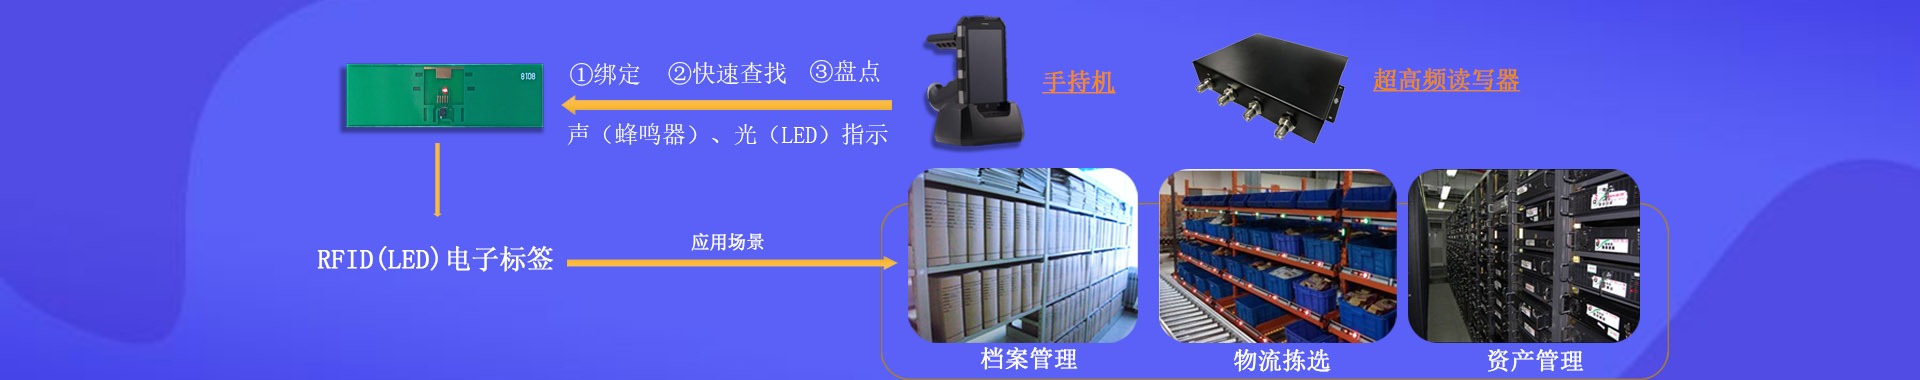 RFID智慧档案,仓储,资产管理解决方案-深圳铨顺宏